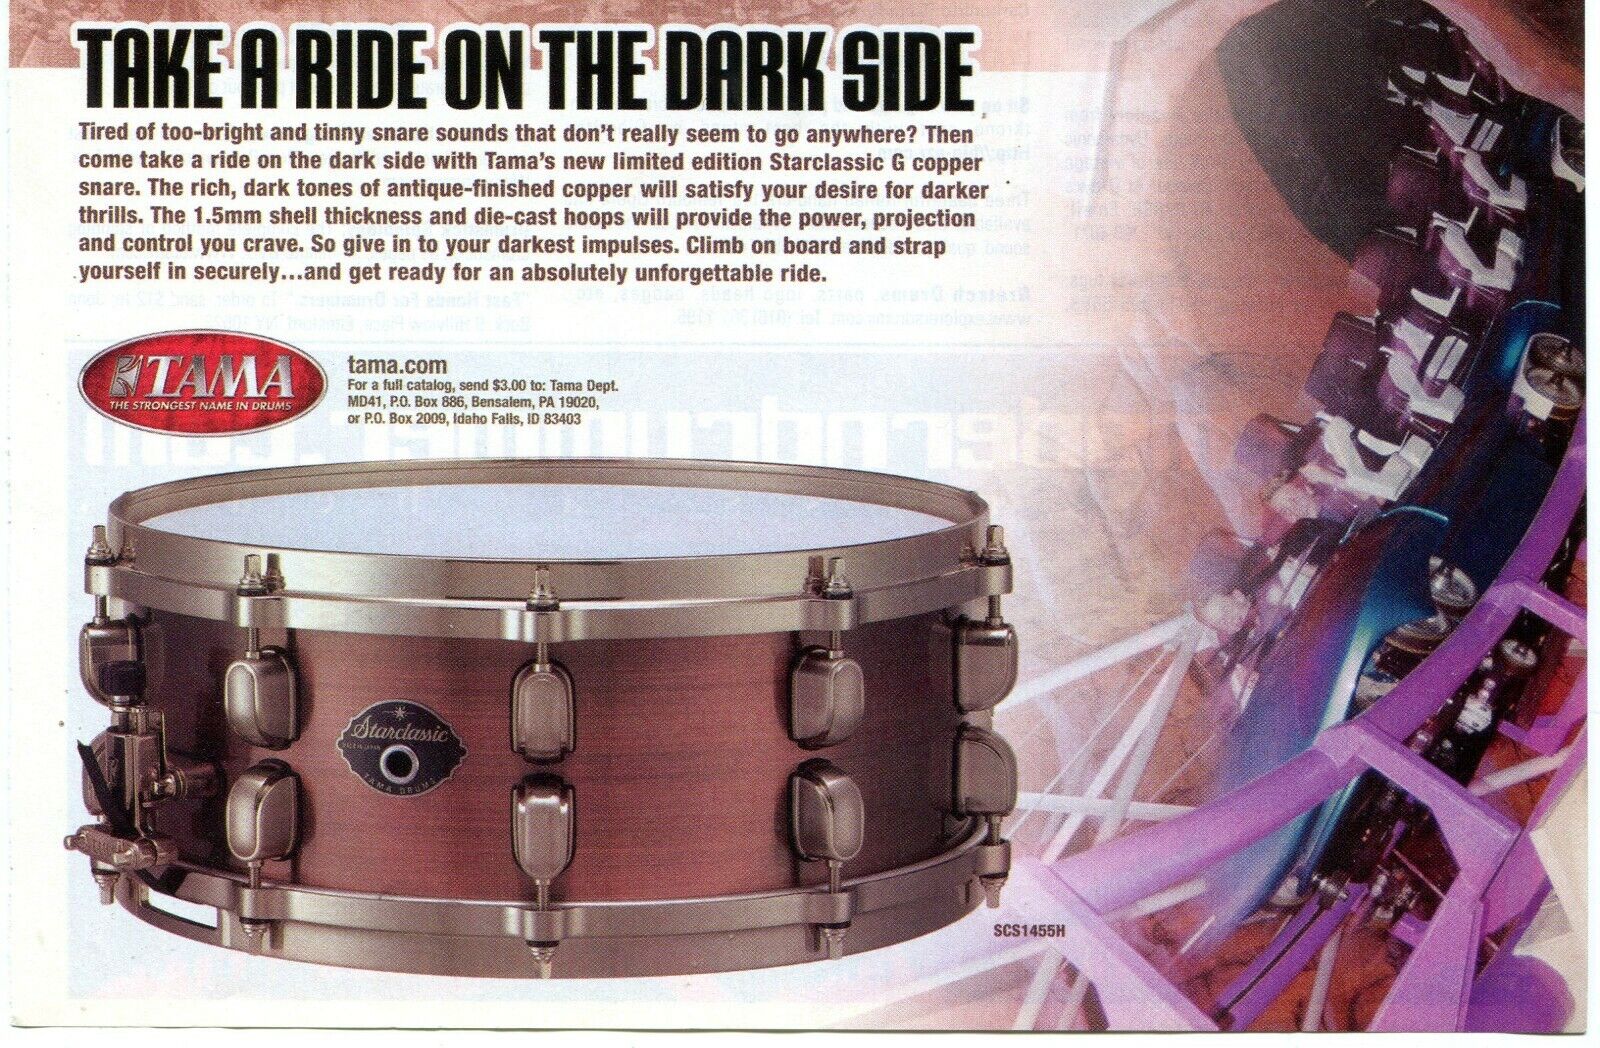 2004 small Print Ad of Tama Starclassic G Copper Snare Drum roller coaster